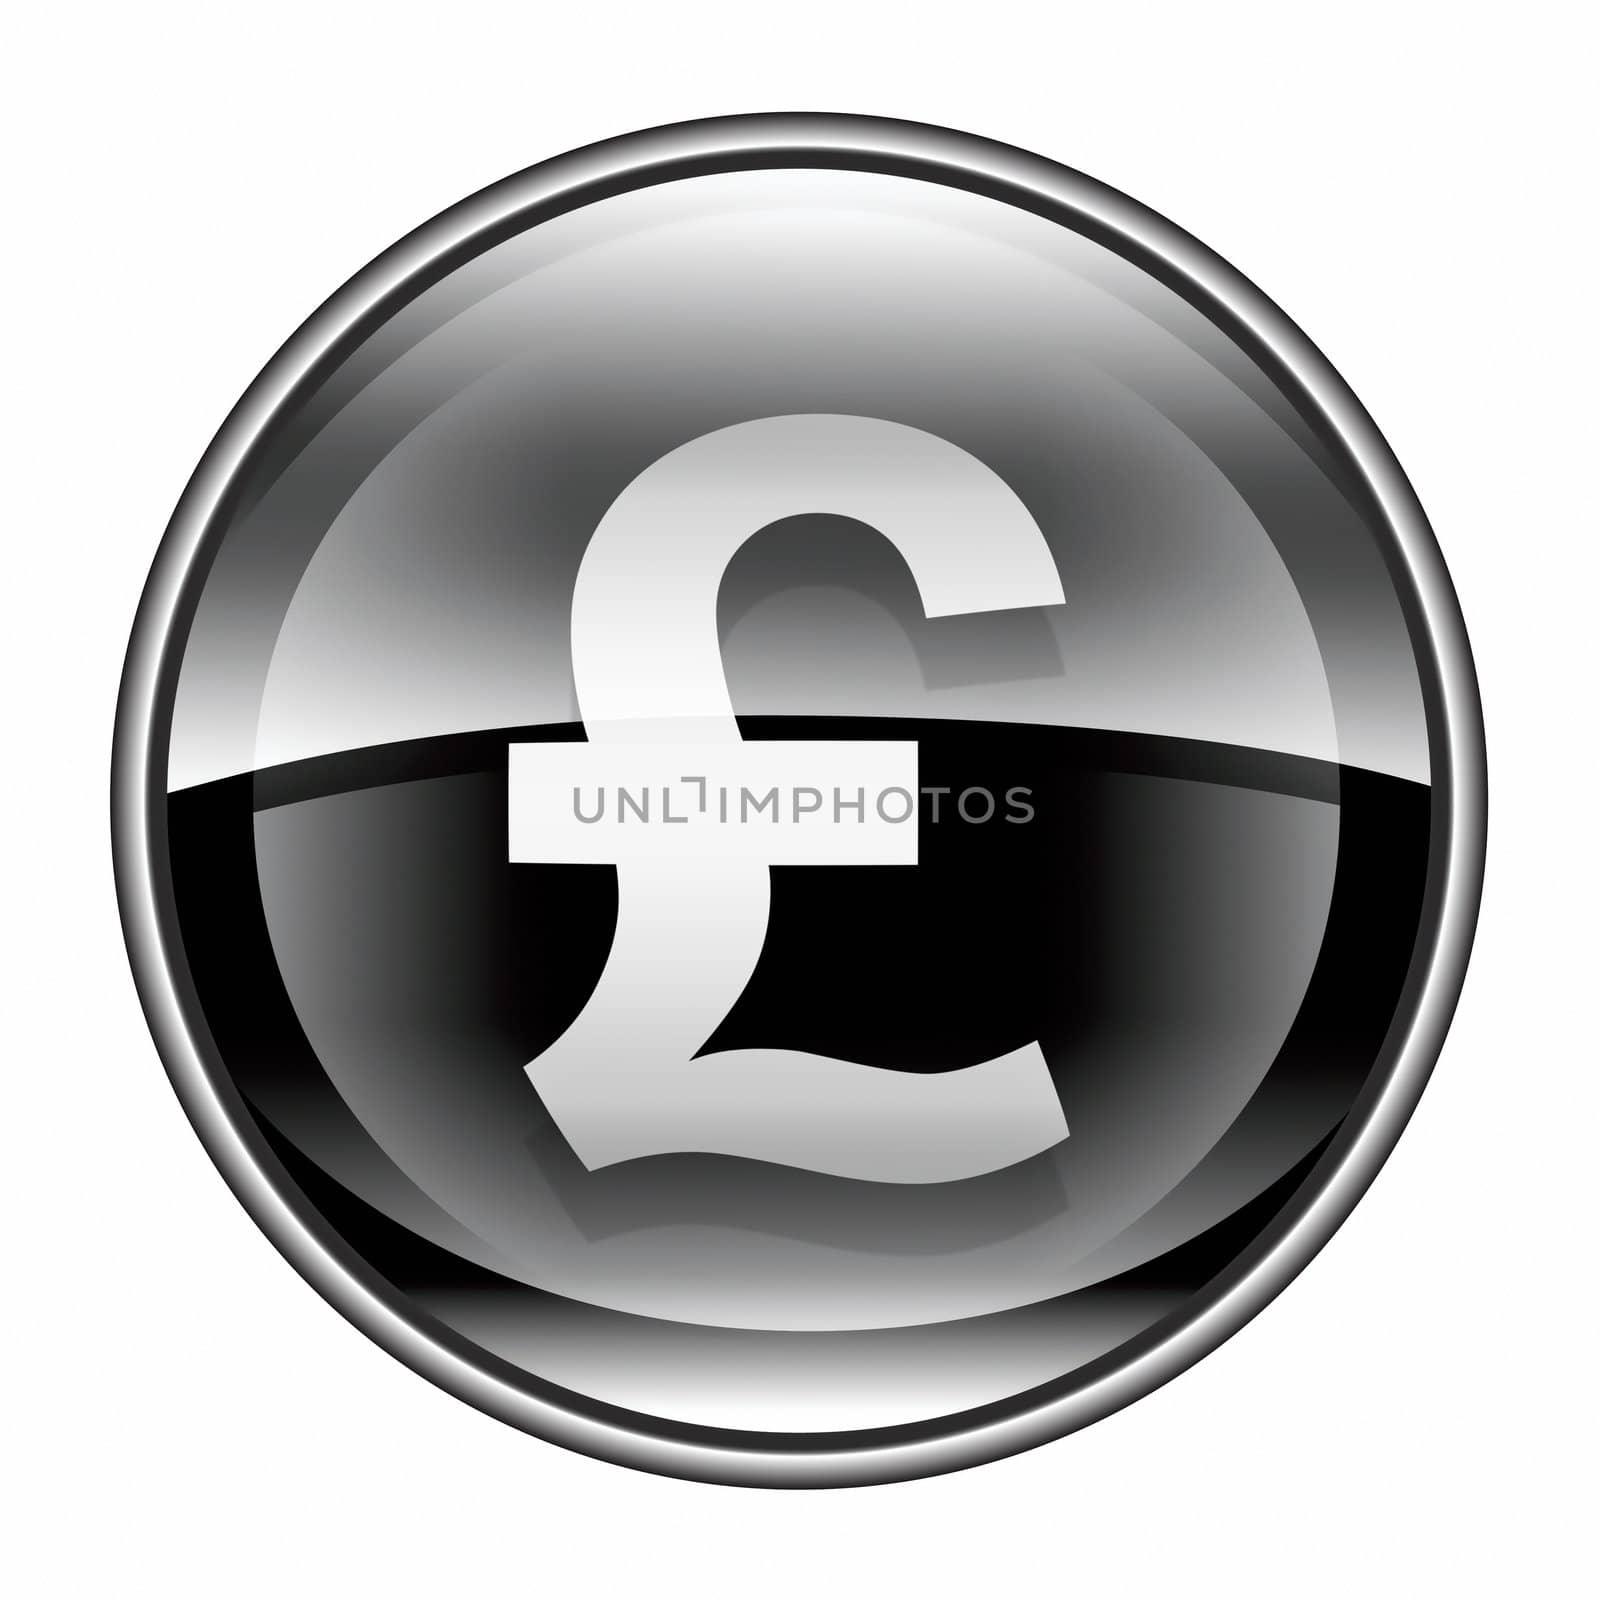 Pound icon black, isolated on white background